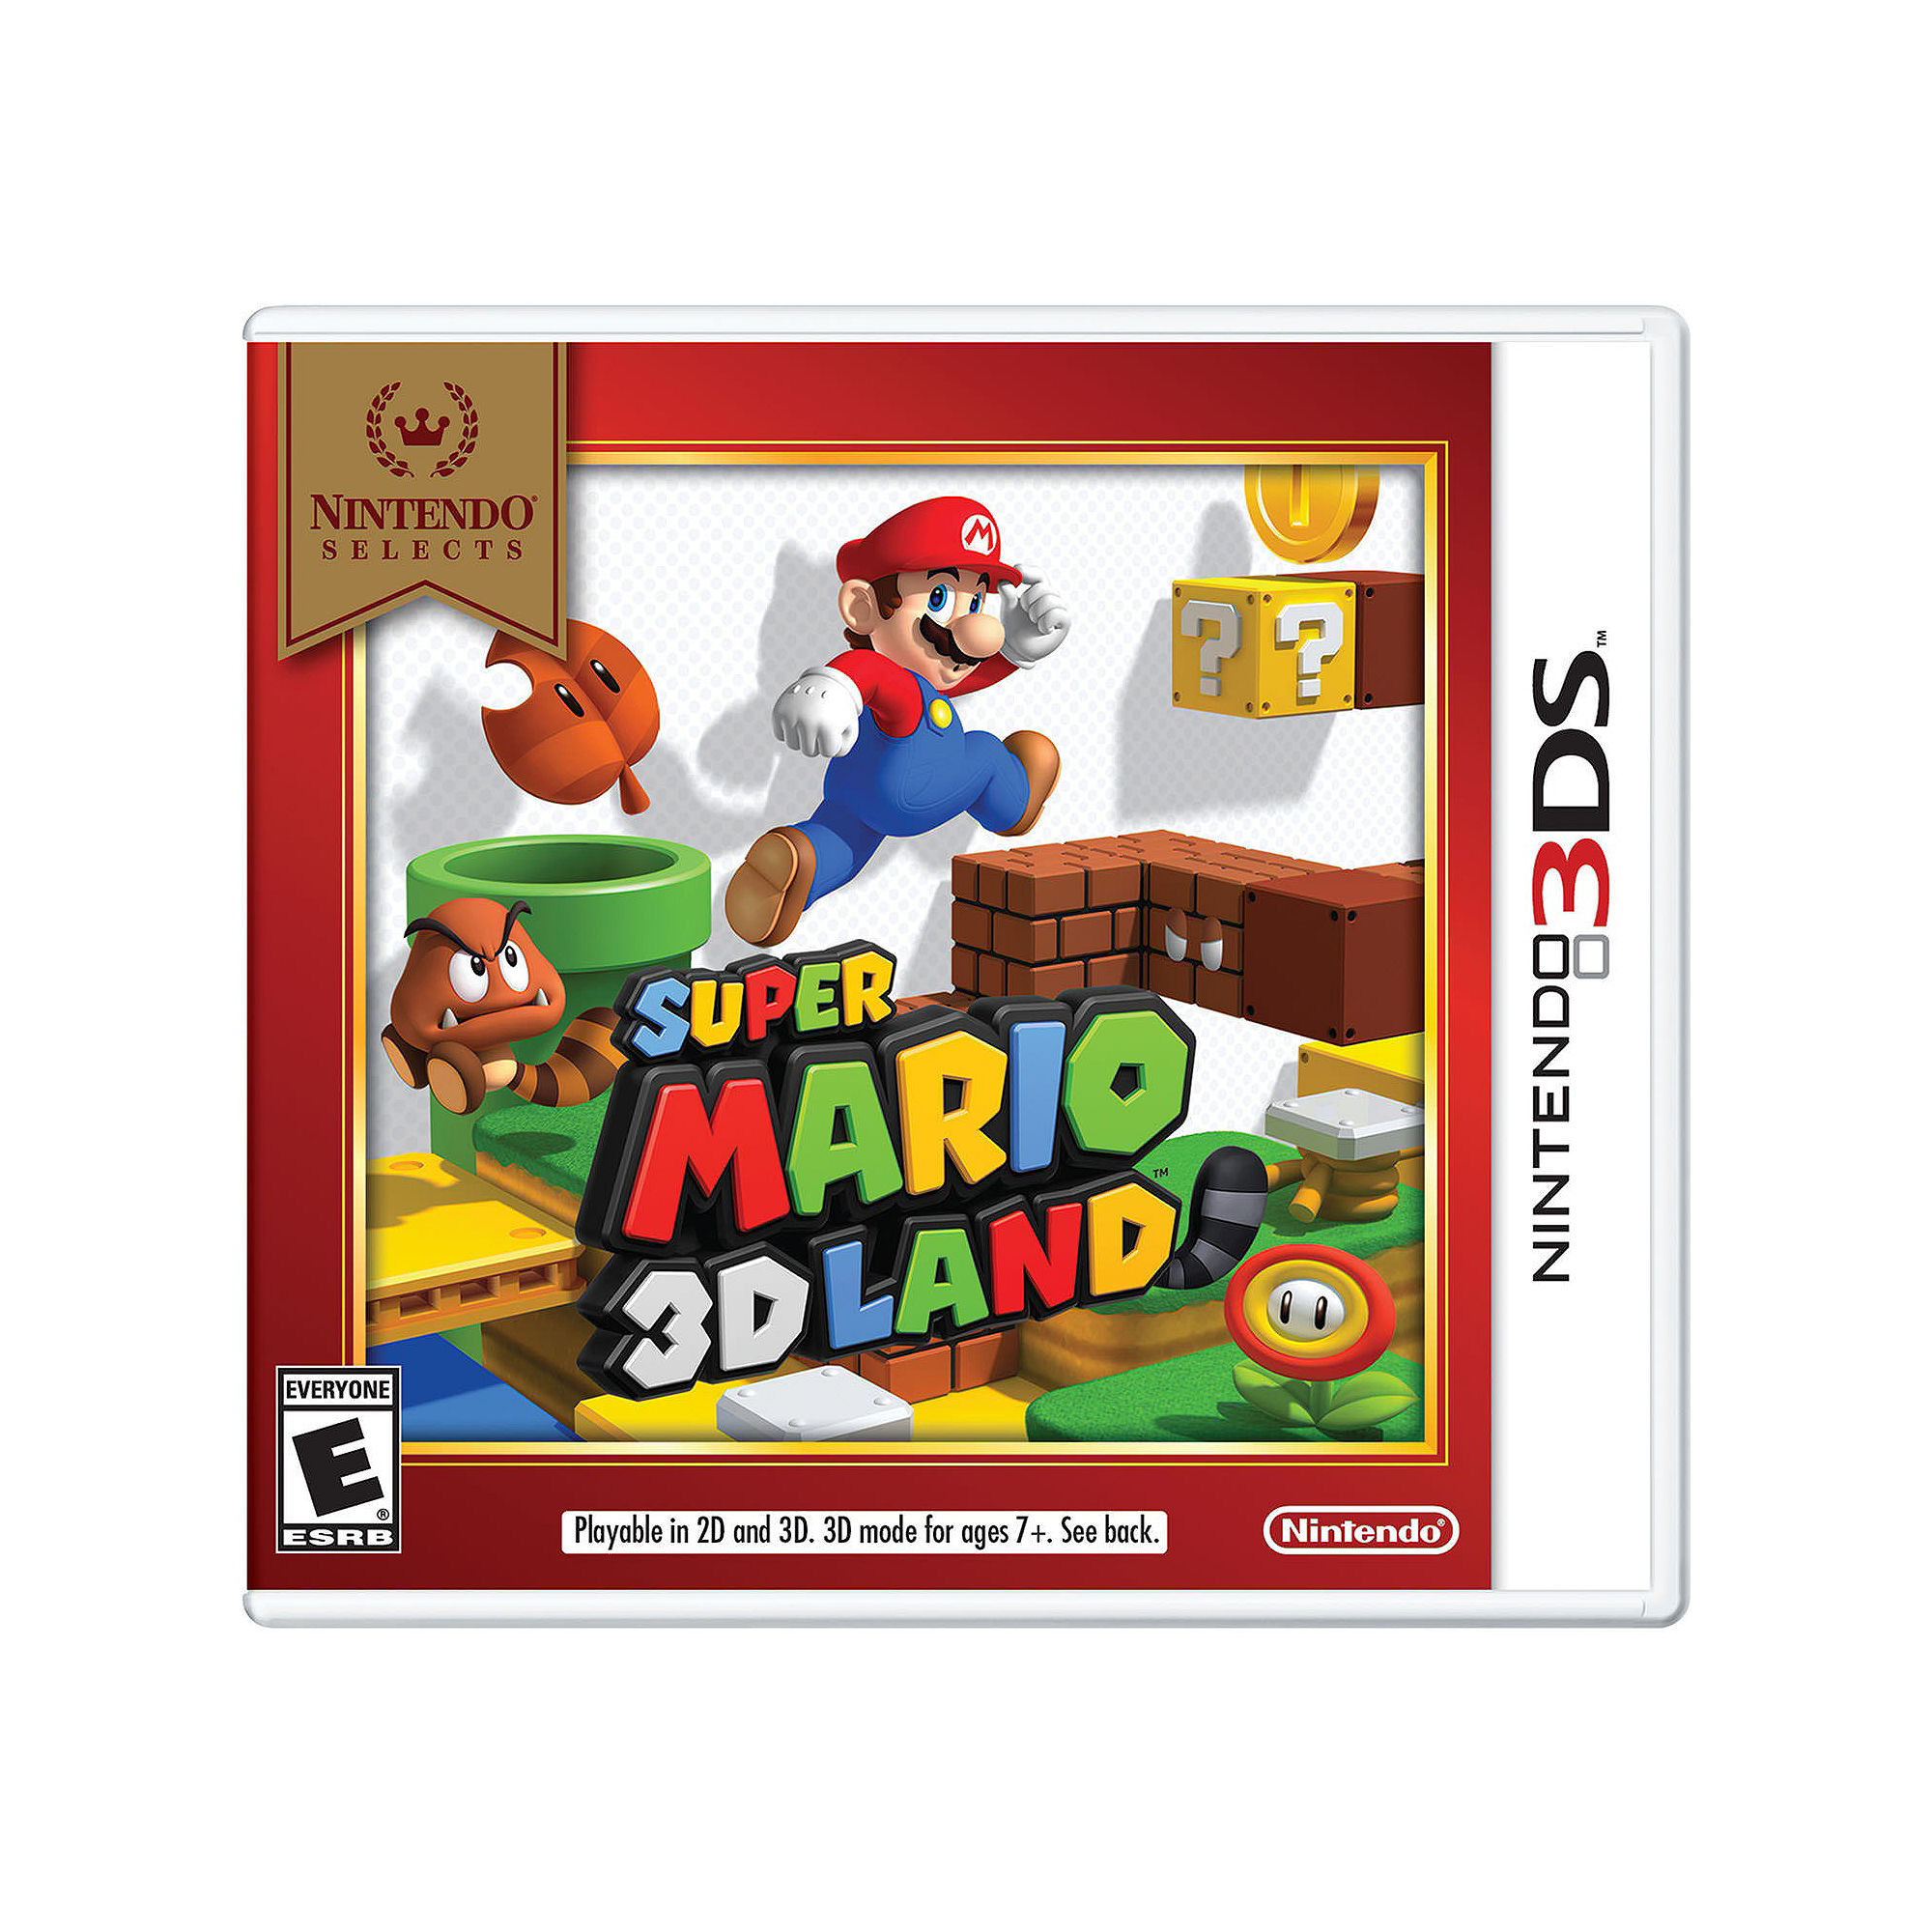 Super Mario 3D Land (Nintendo Selects), Nintendo, Nintendo 3DS, 045496744946 - image 3 of 4